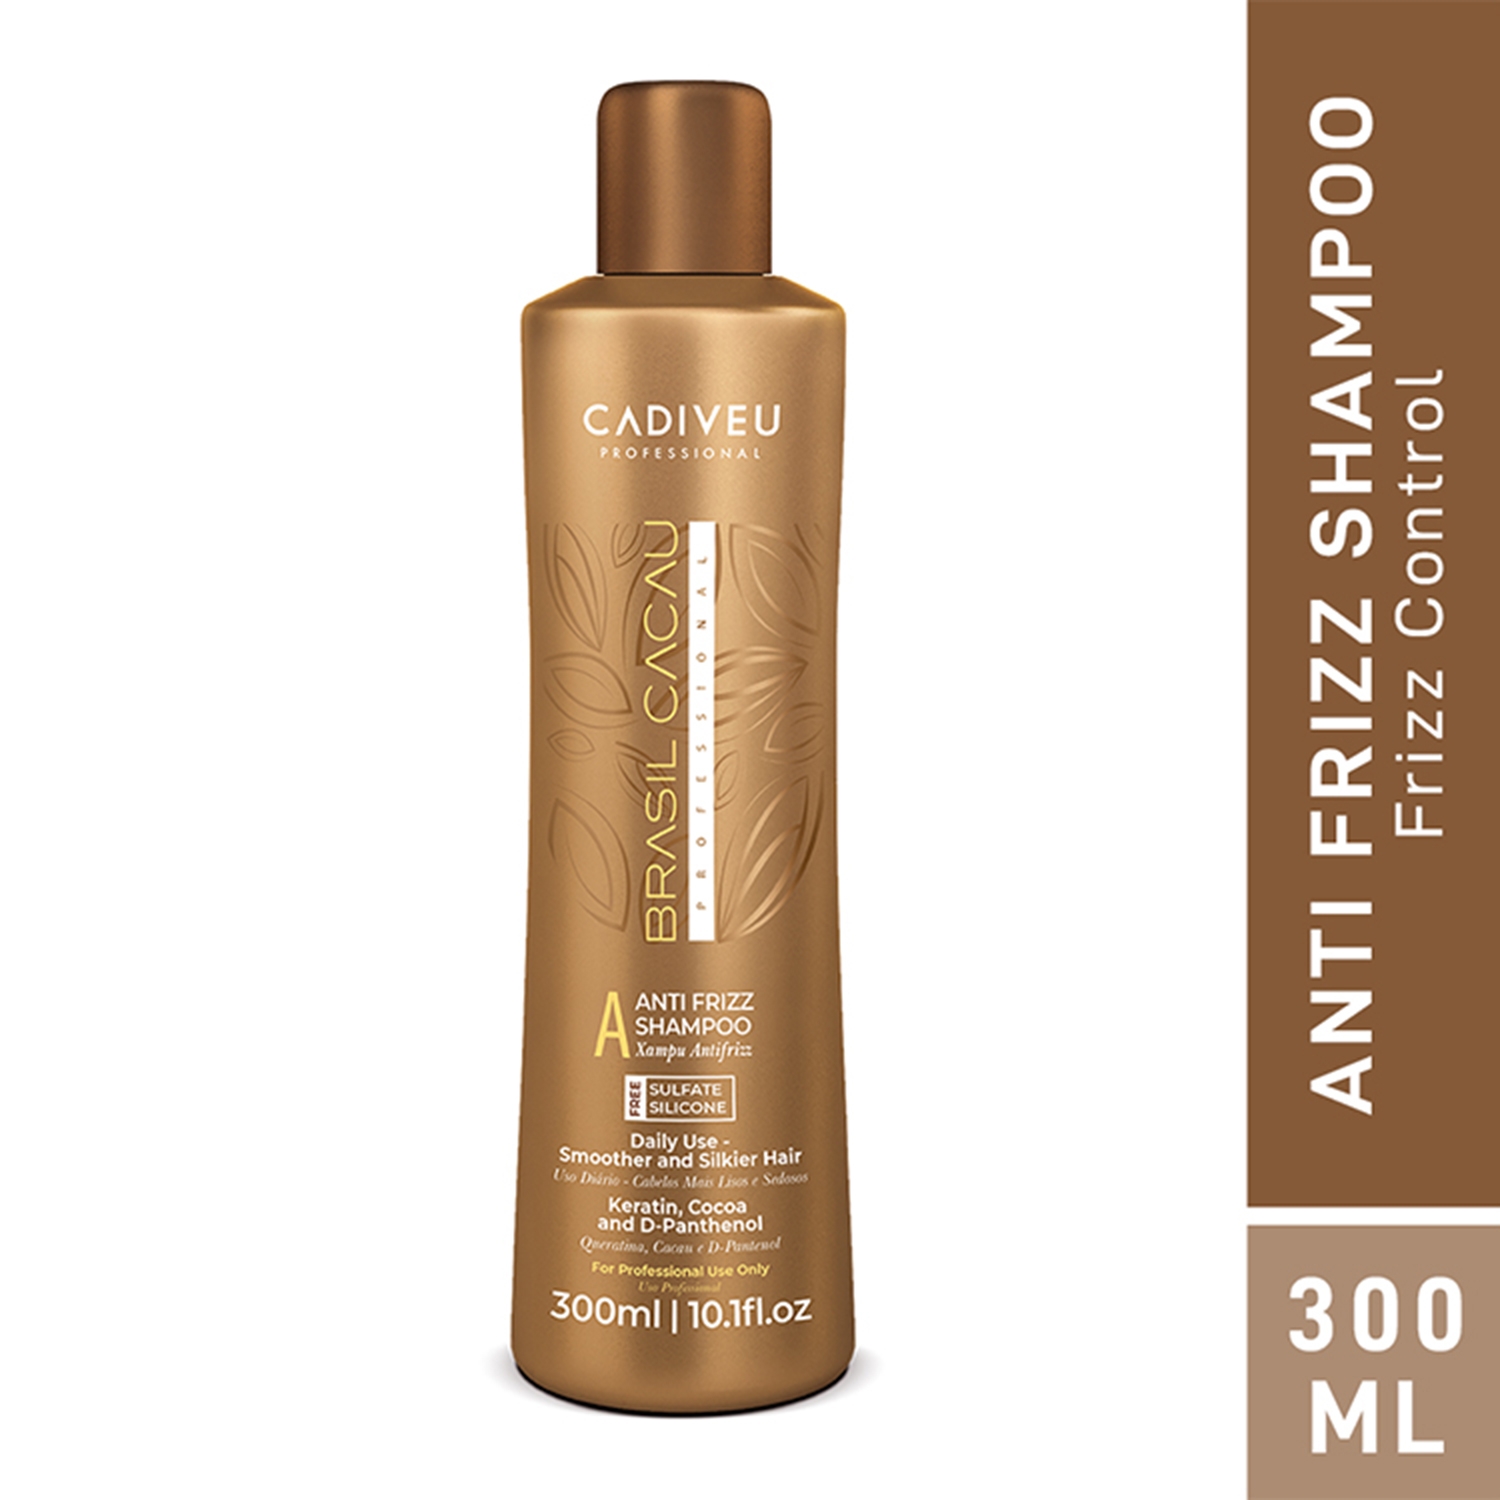 Cadiveu | Cadiveu Brasil Cacau Anti Frizz Shampoo sulfate free (300ml)